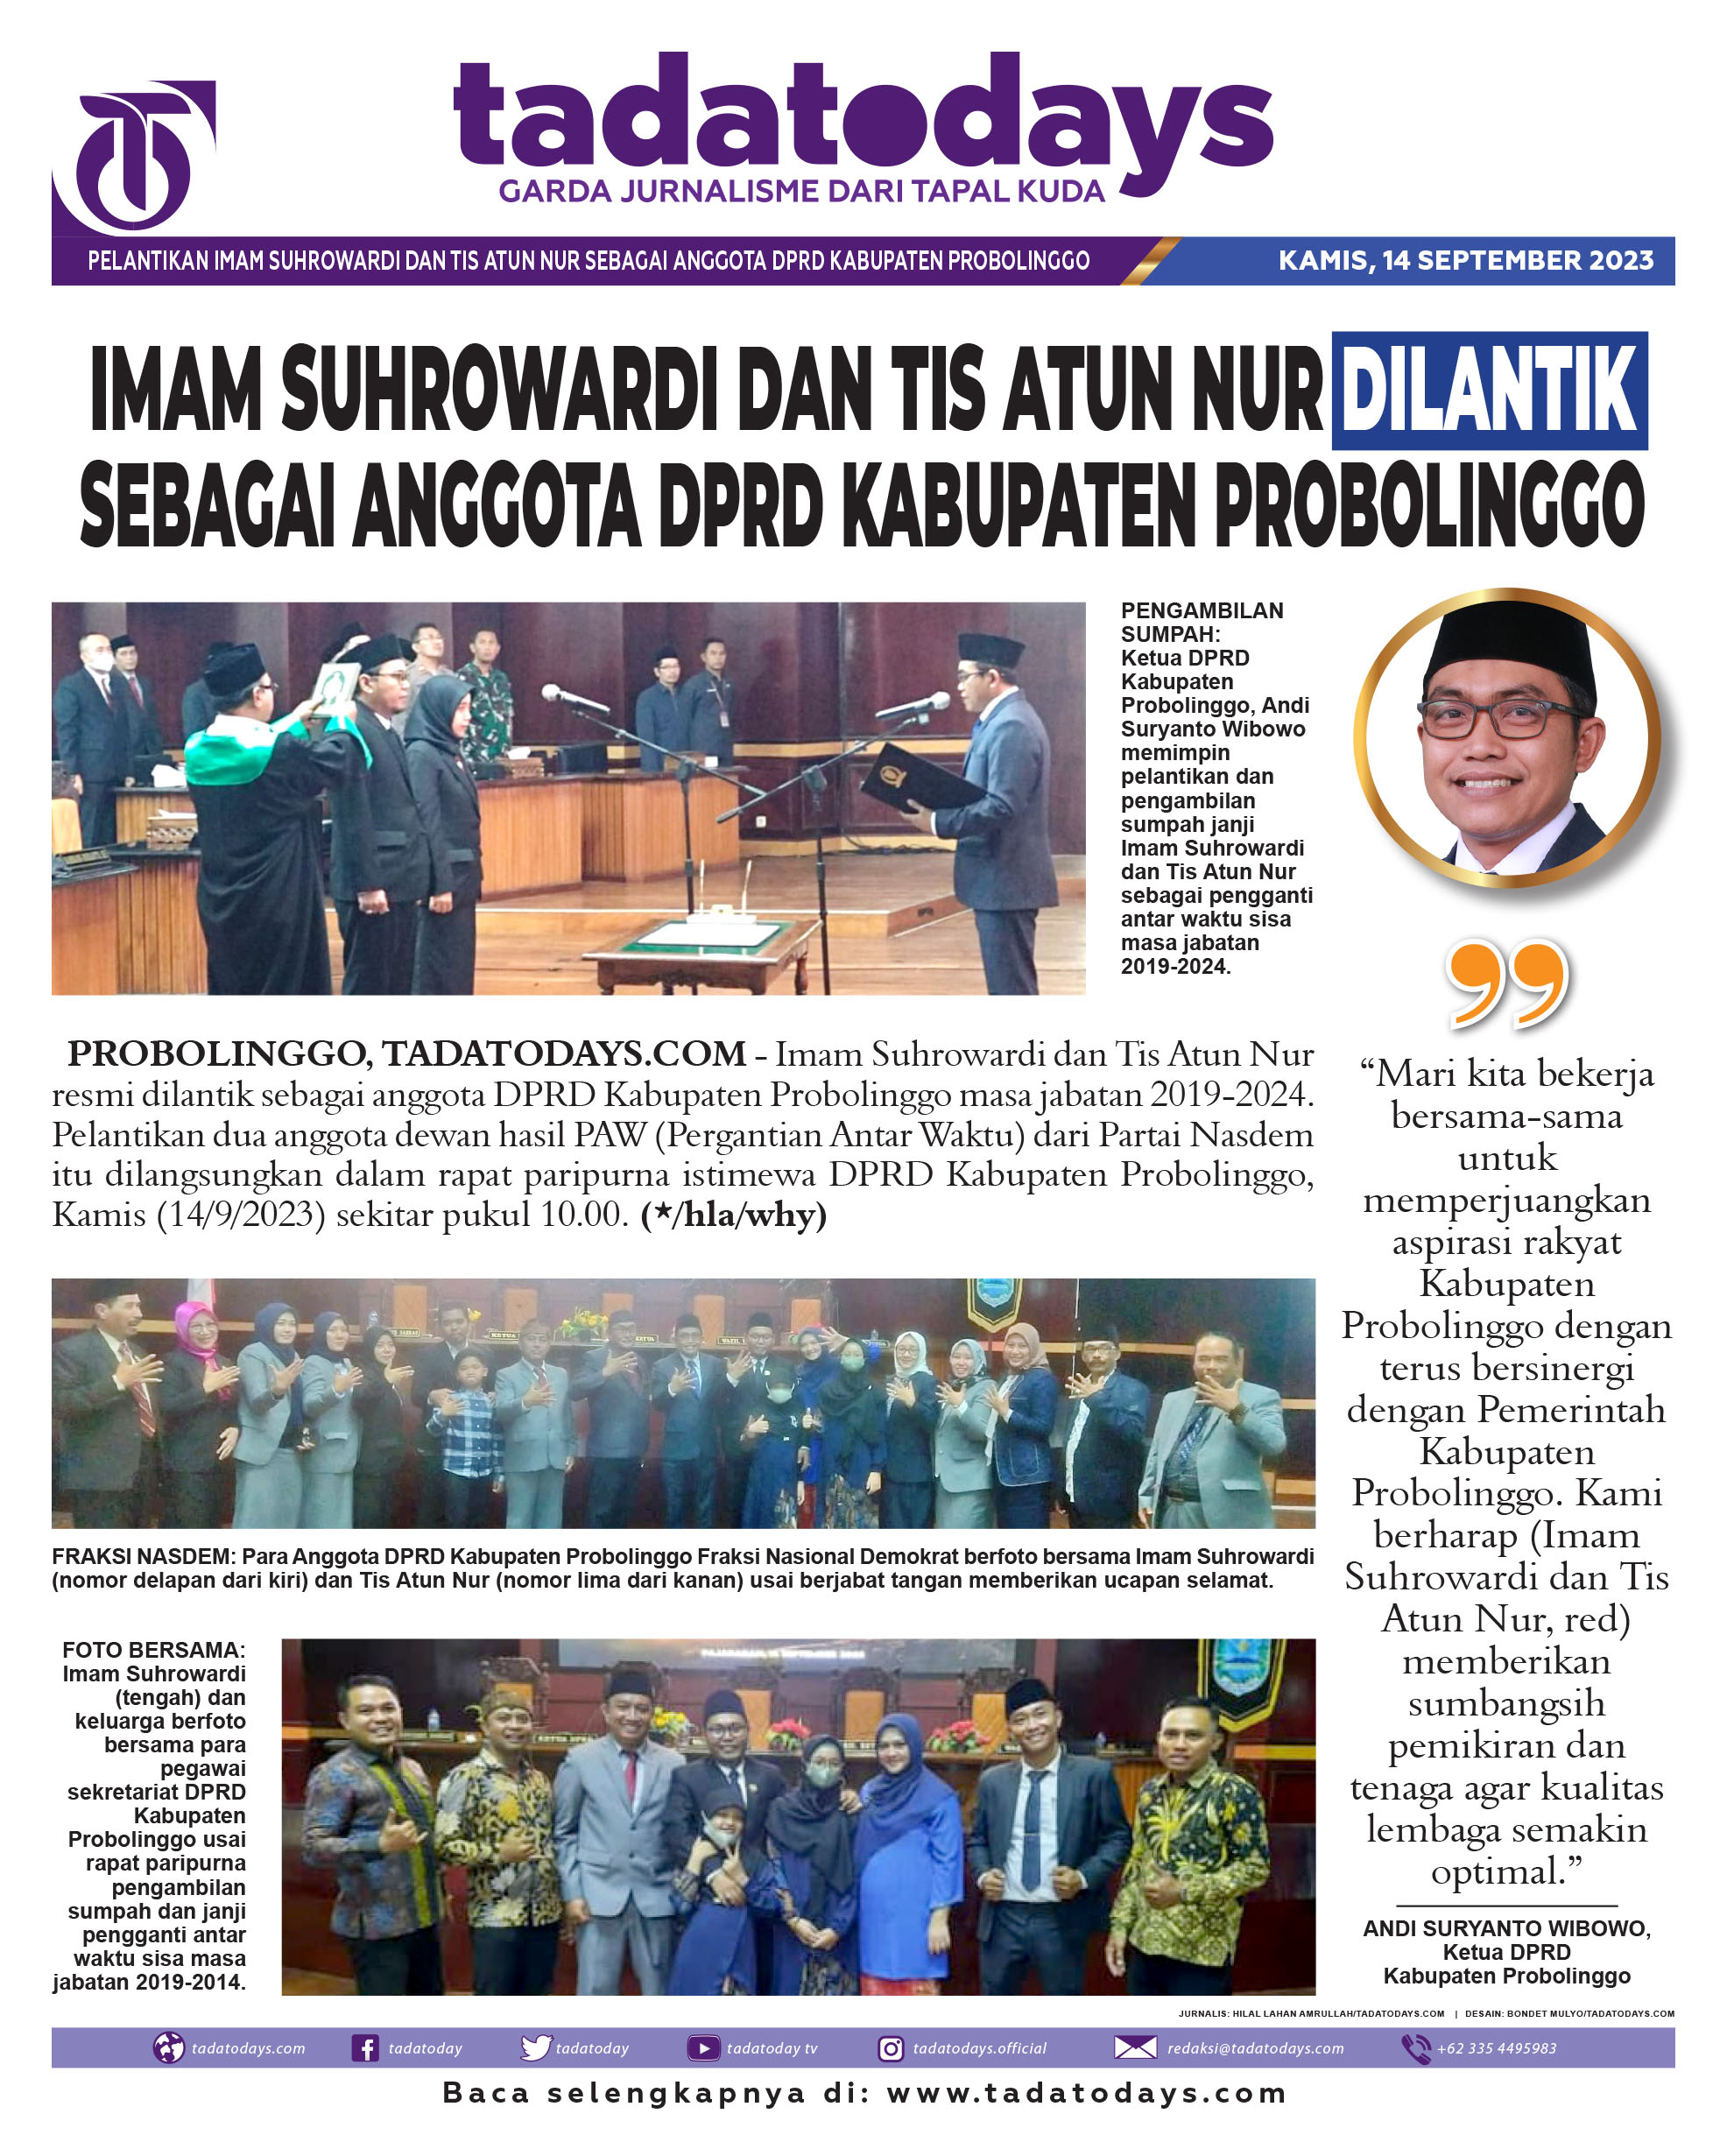 Imam Suhrowardi dan Tis Atun Nur Dilantik menjadi Anggota DPRD Kabupaten Probolinggo